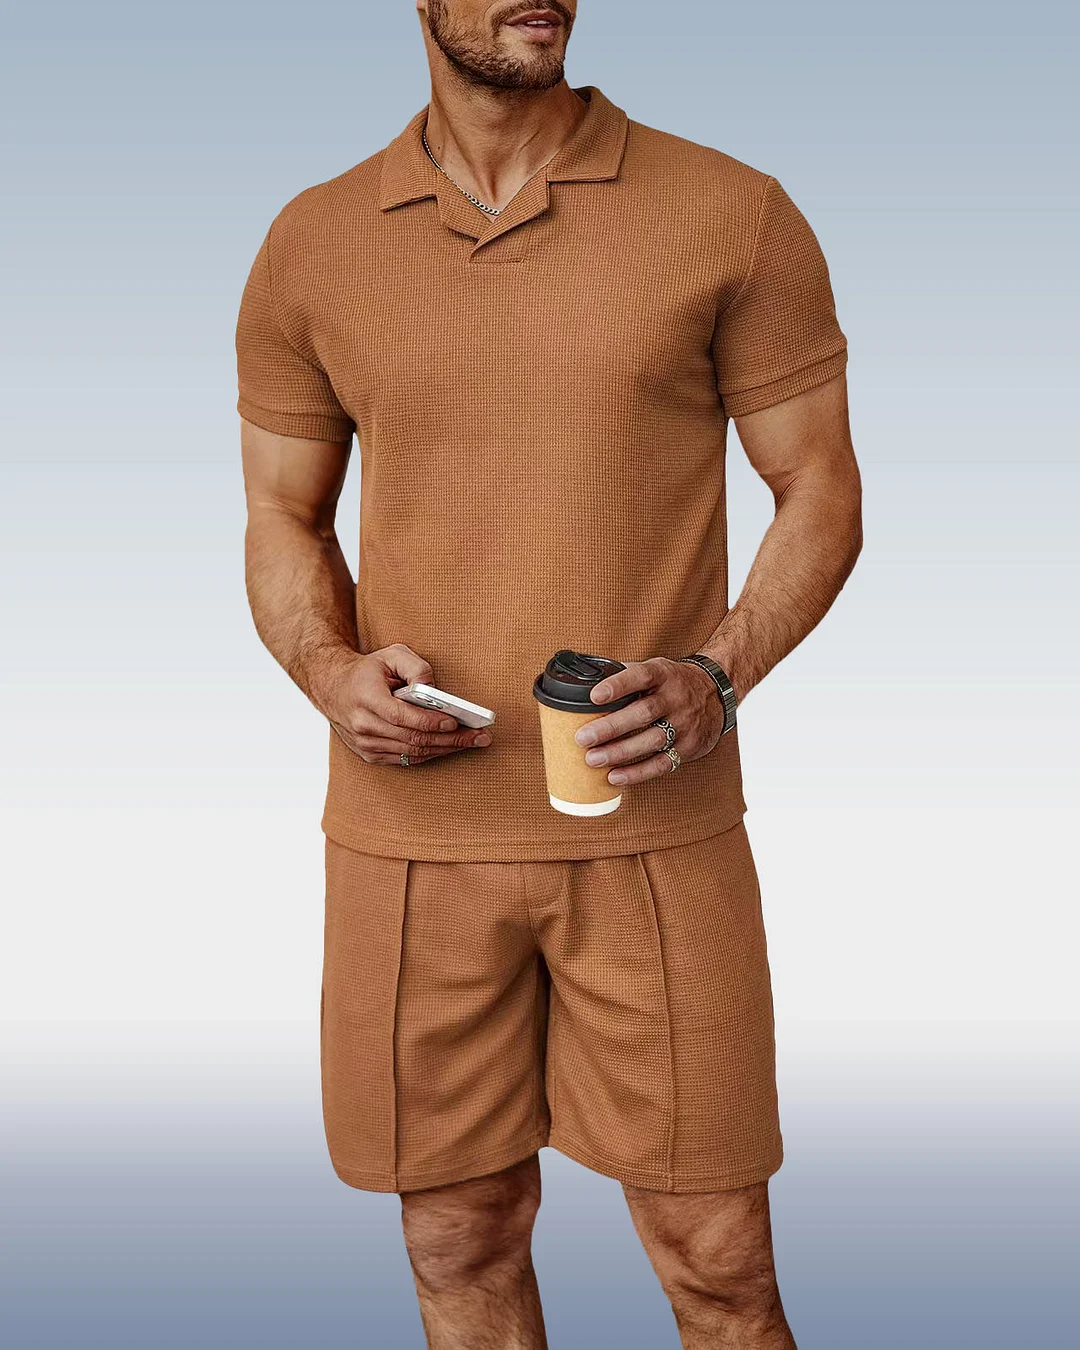 Suitmens Men's Brown Knit V-Neck Polo Shirt